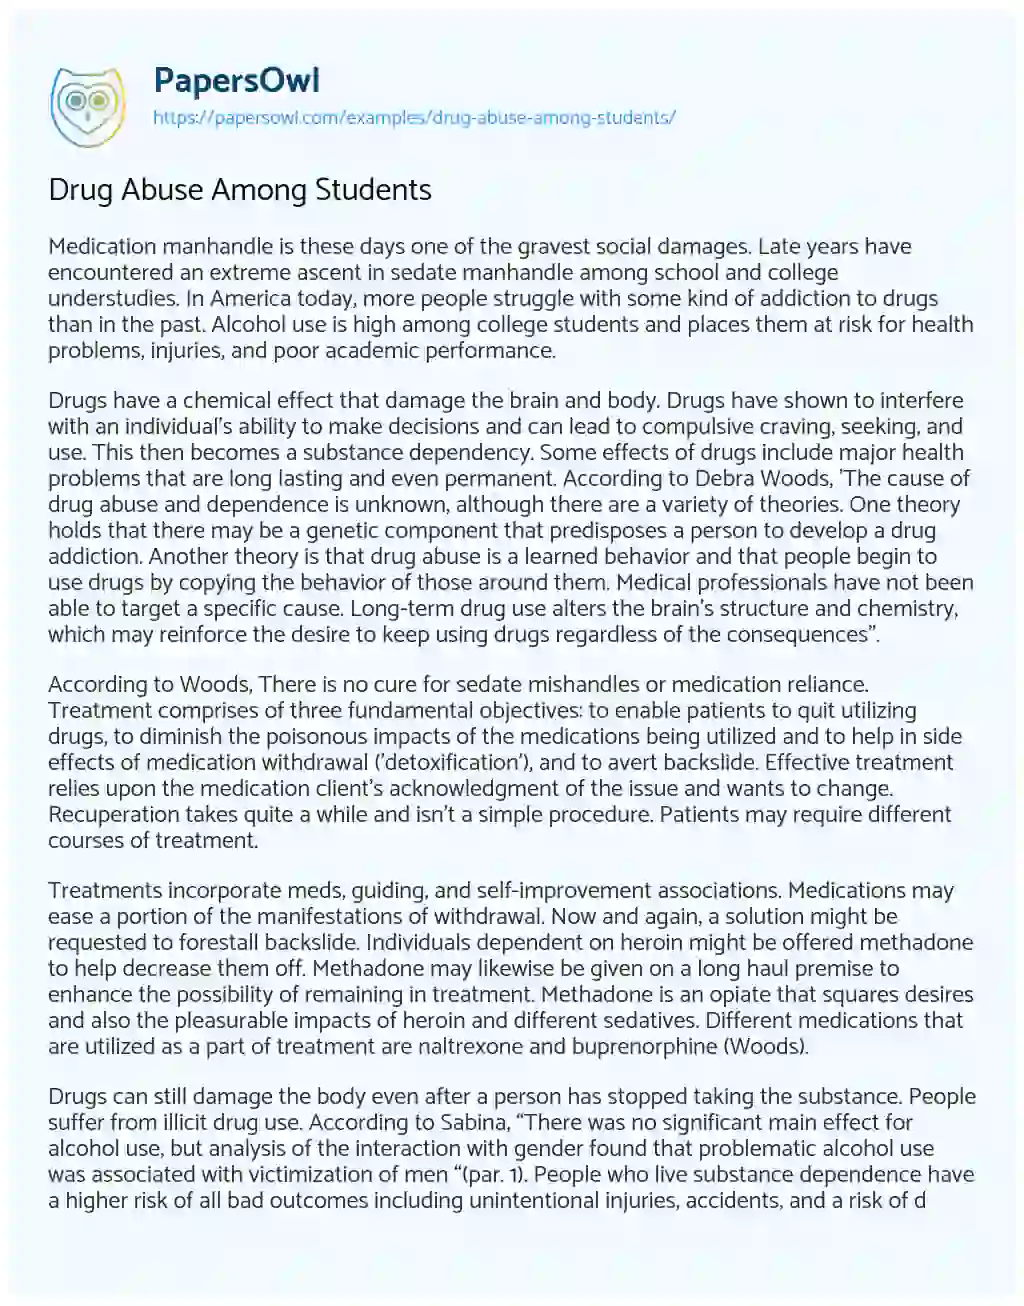 Essay on Drug Abuse Among Students